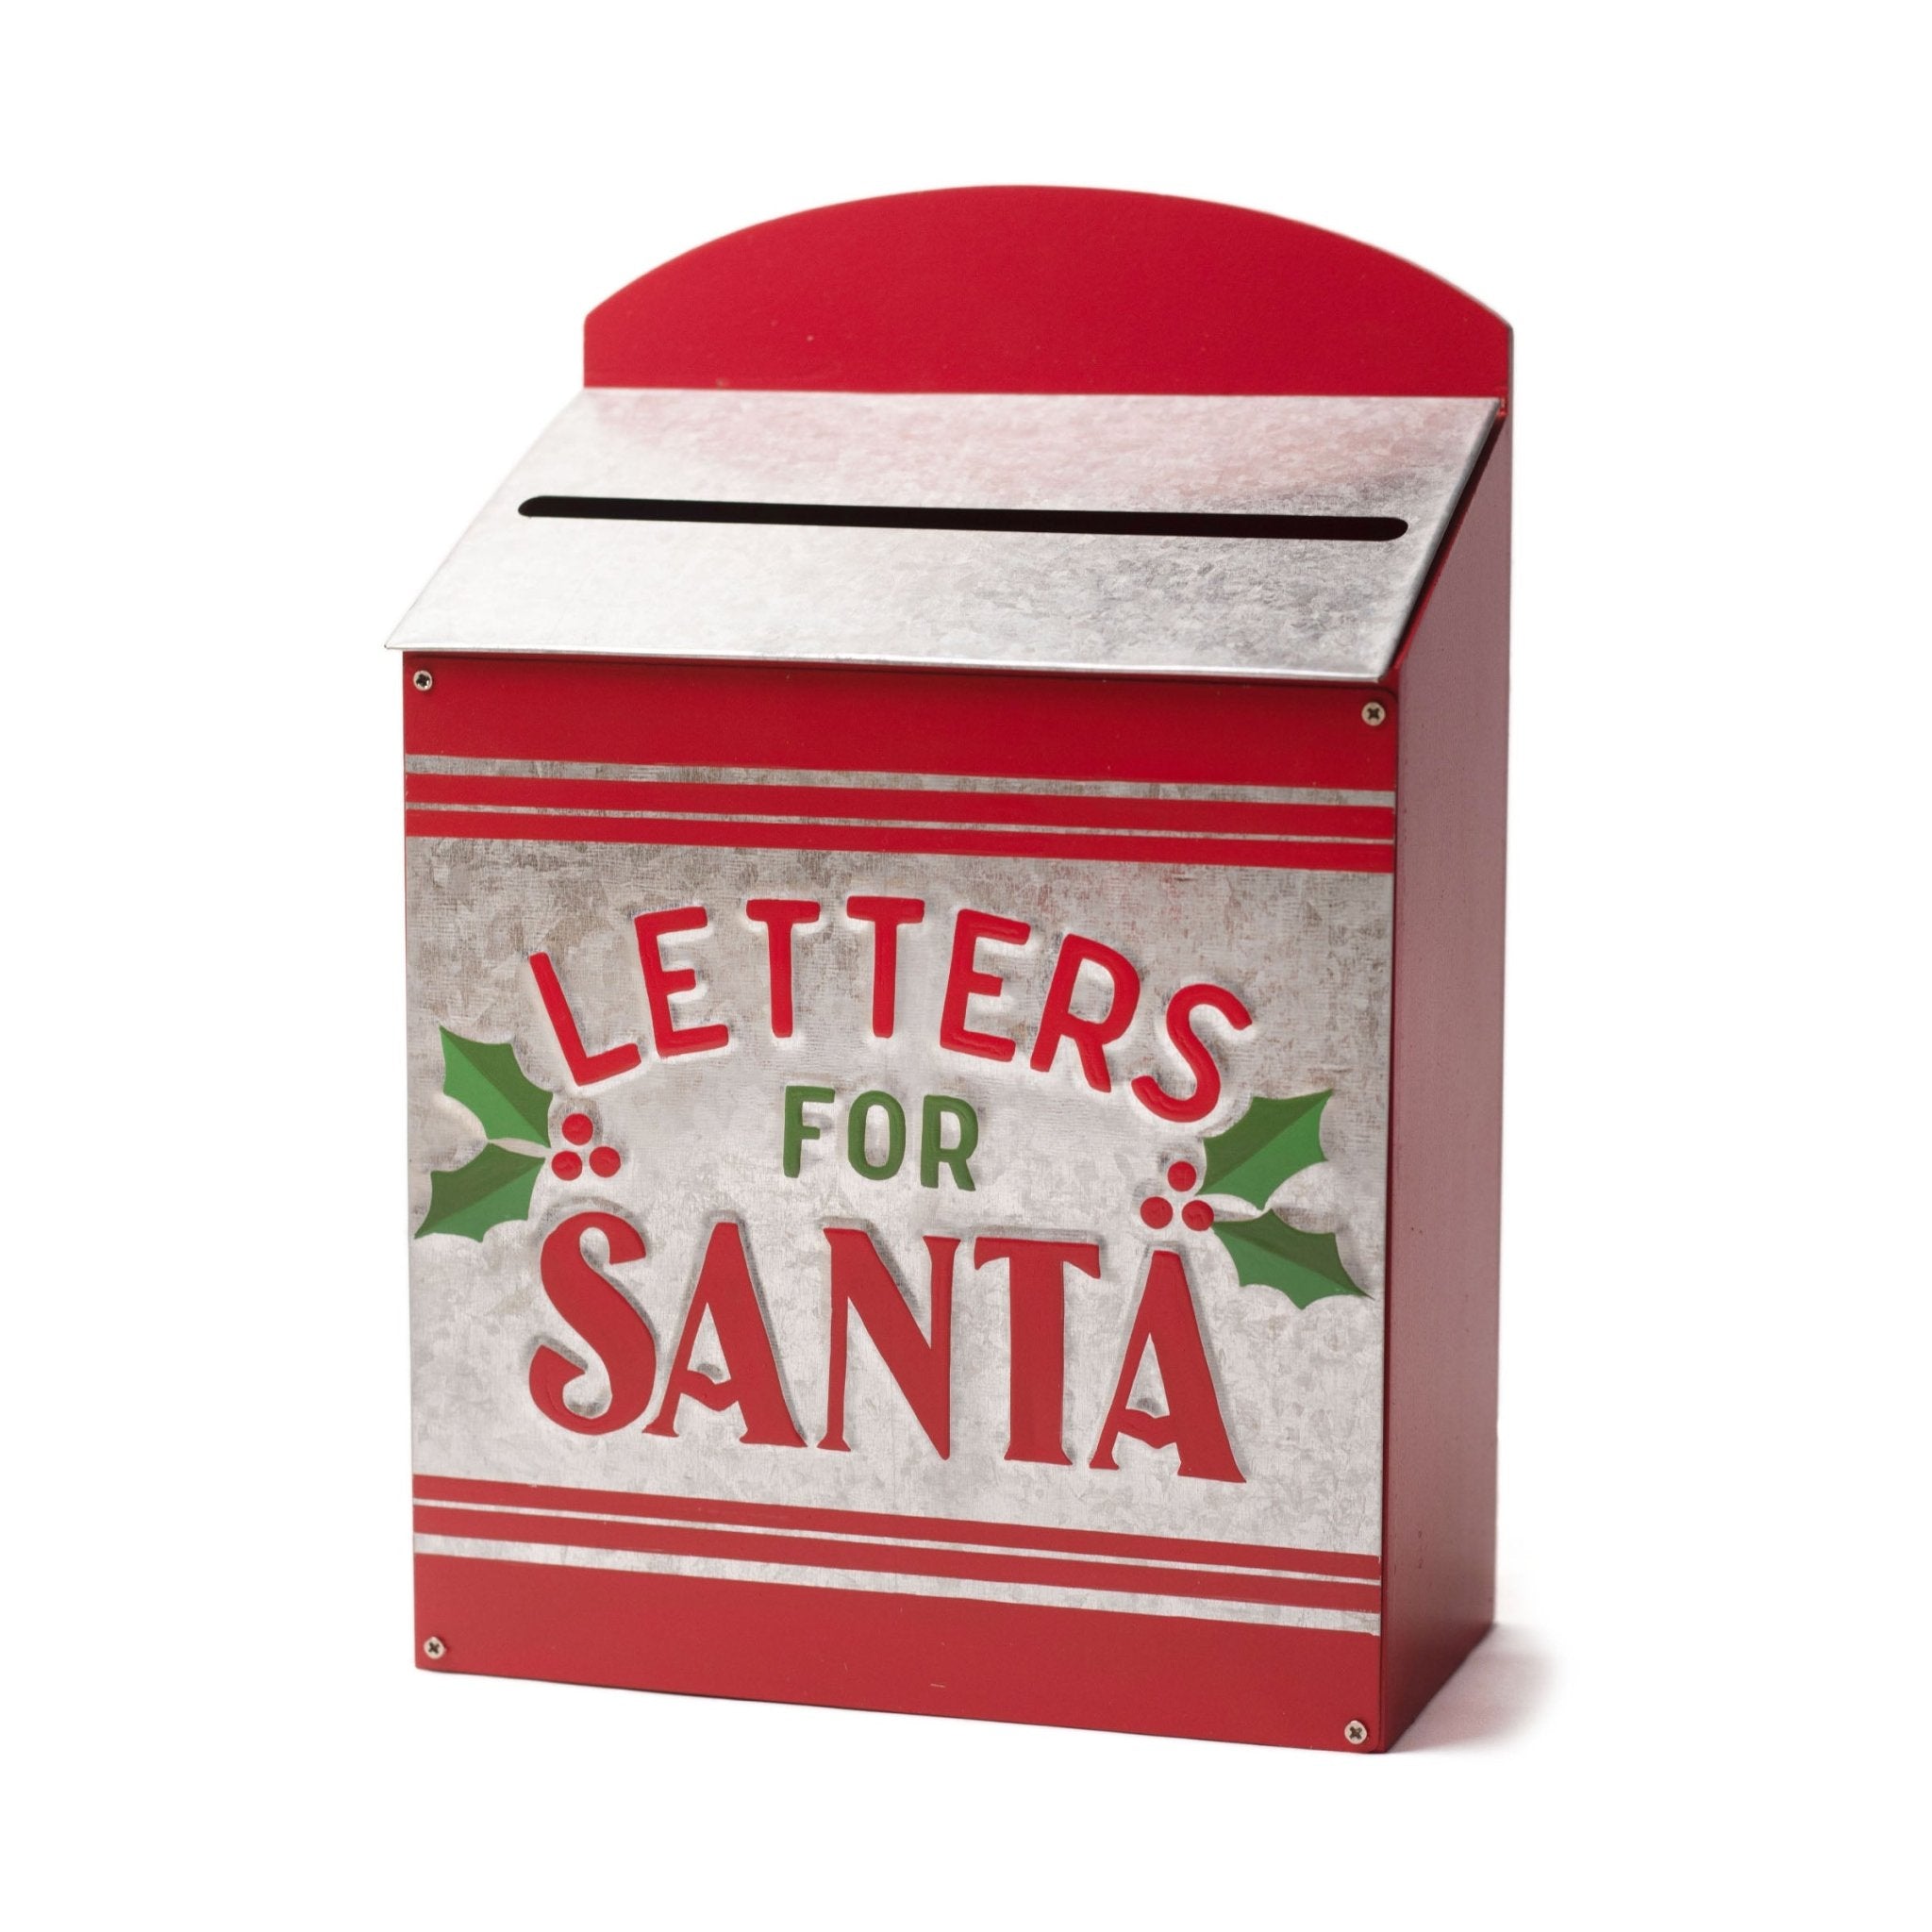 Letters for Santa Mail Box 19x28cm 1928001 - MODA FLORA Santa's Workshop